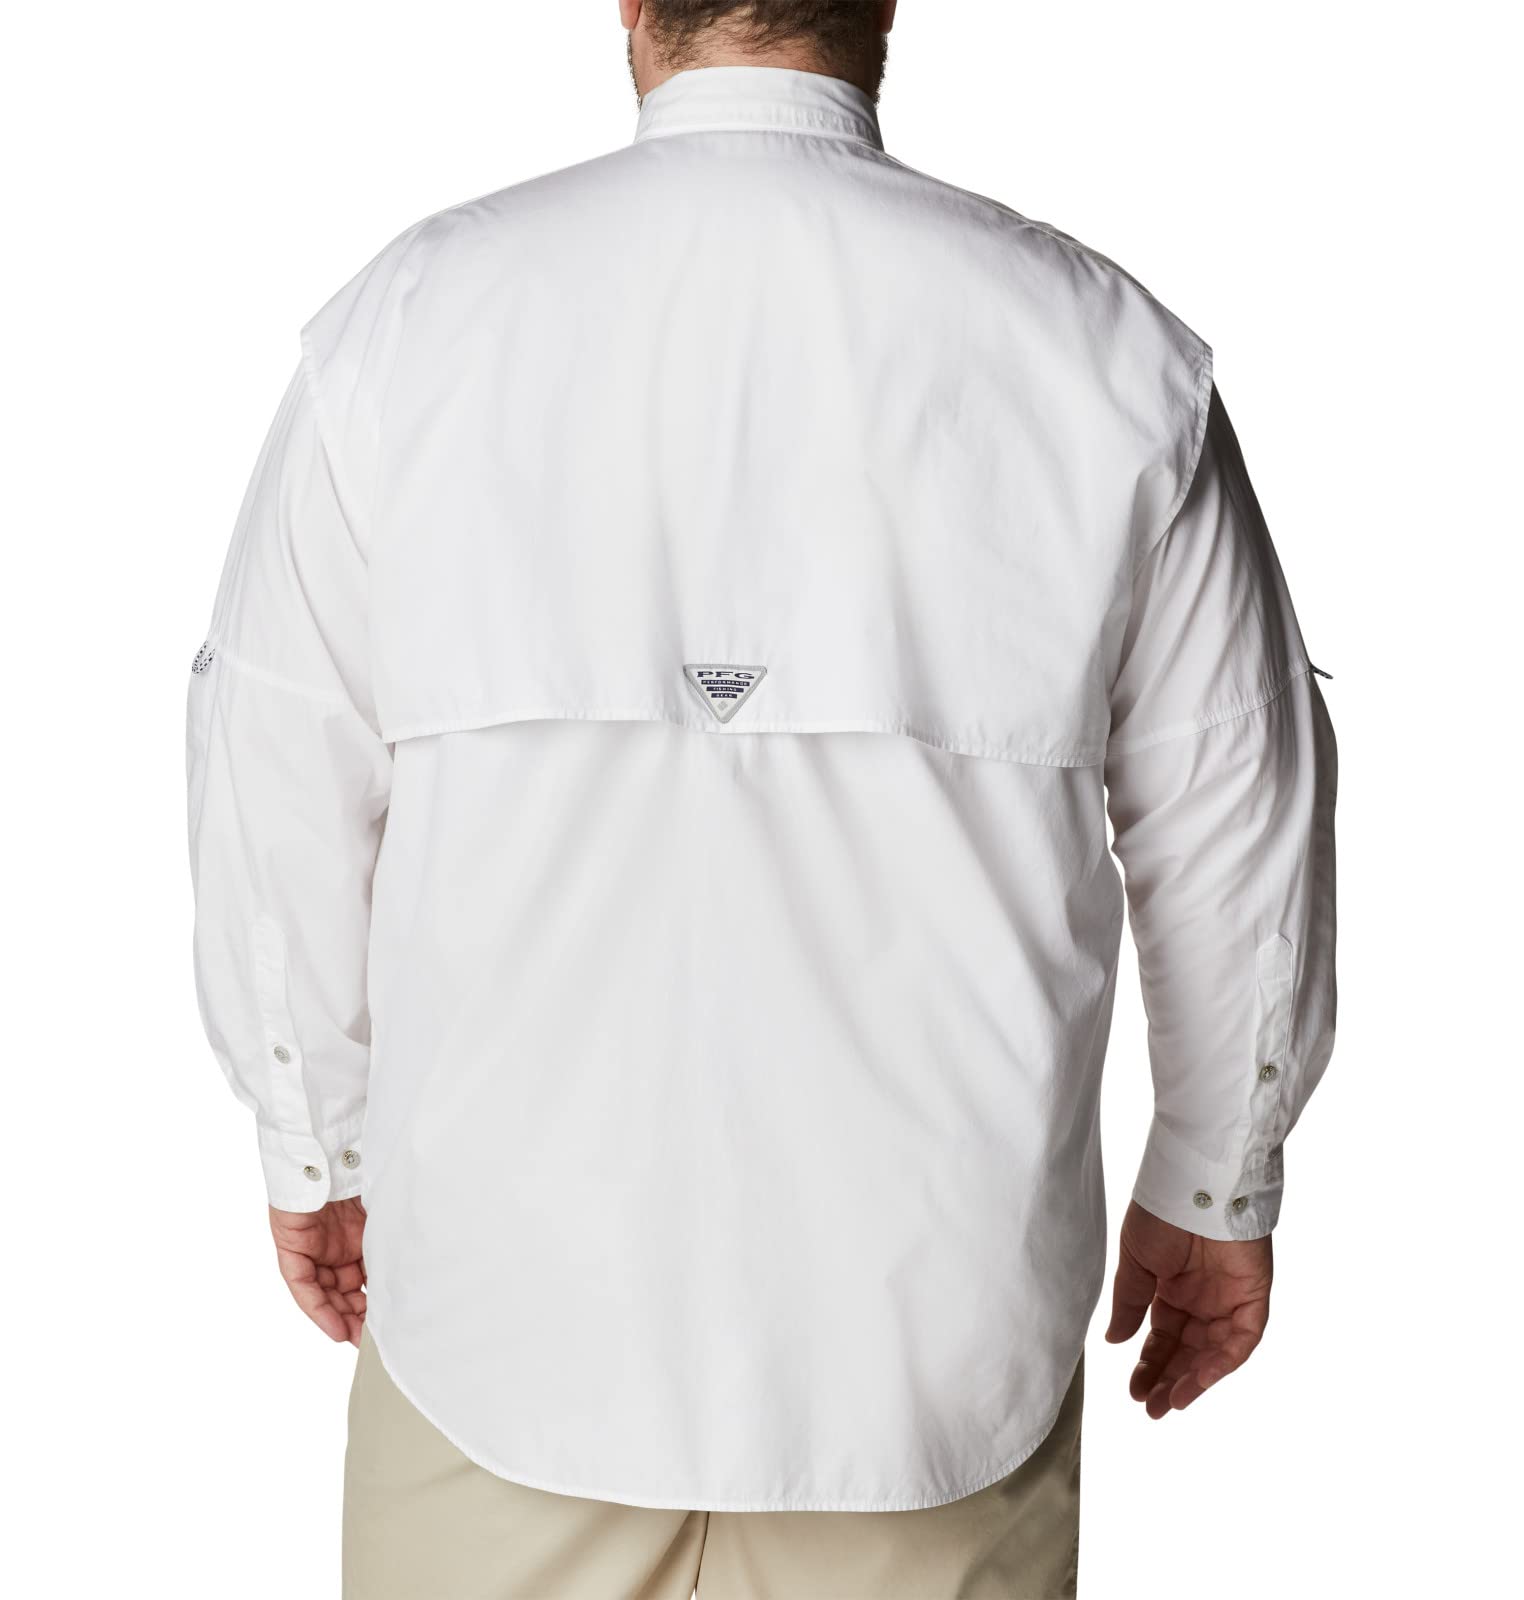 Columbia Men's Bonehead Short Sleeve Shirt